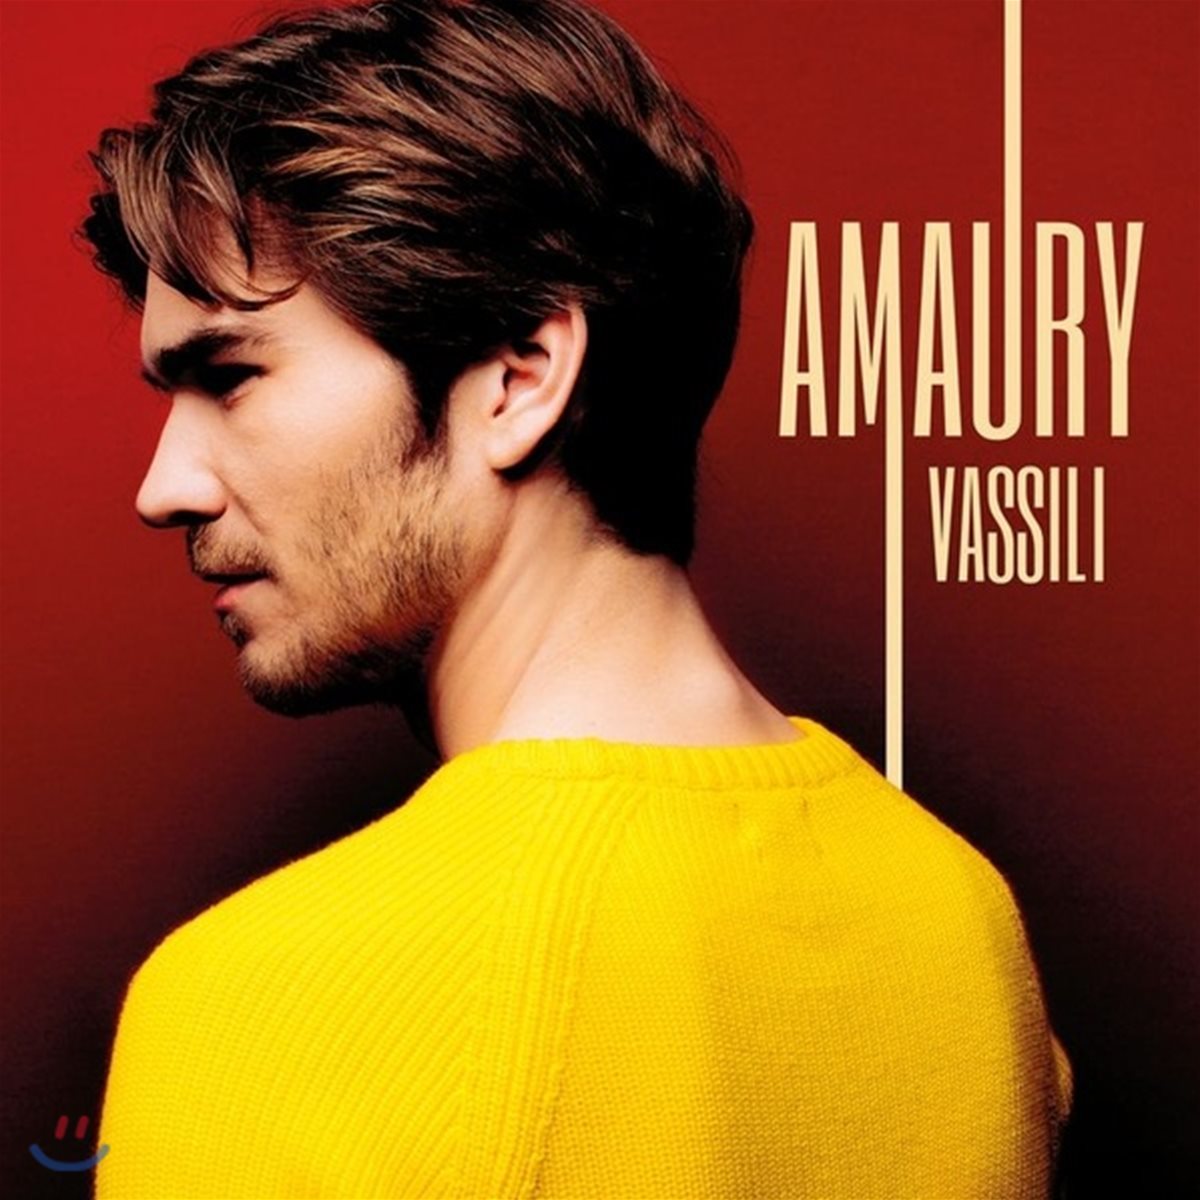 Amaury Vassili (아모리 바실리) - Amaury